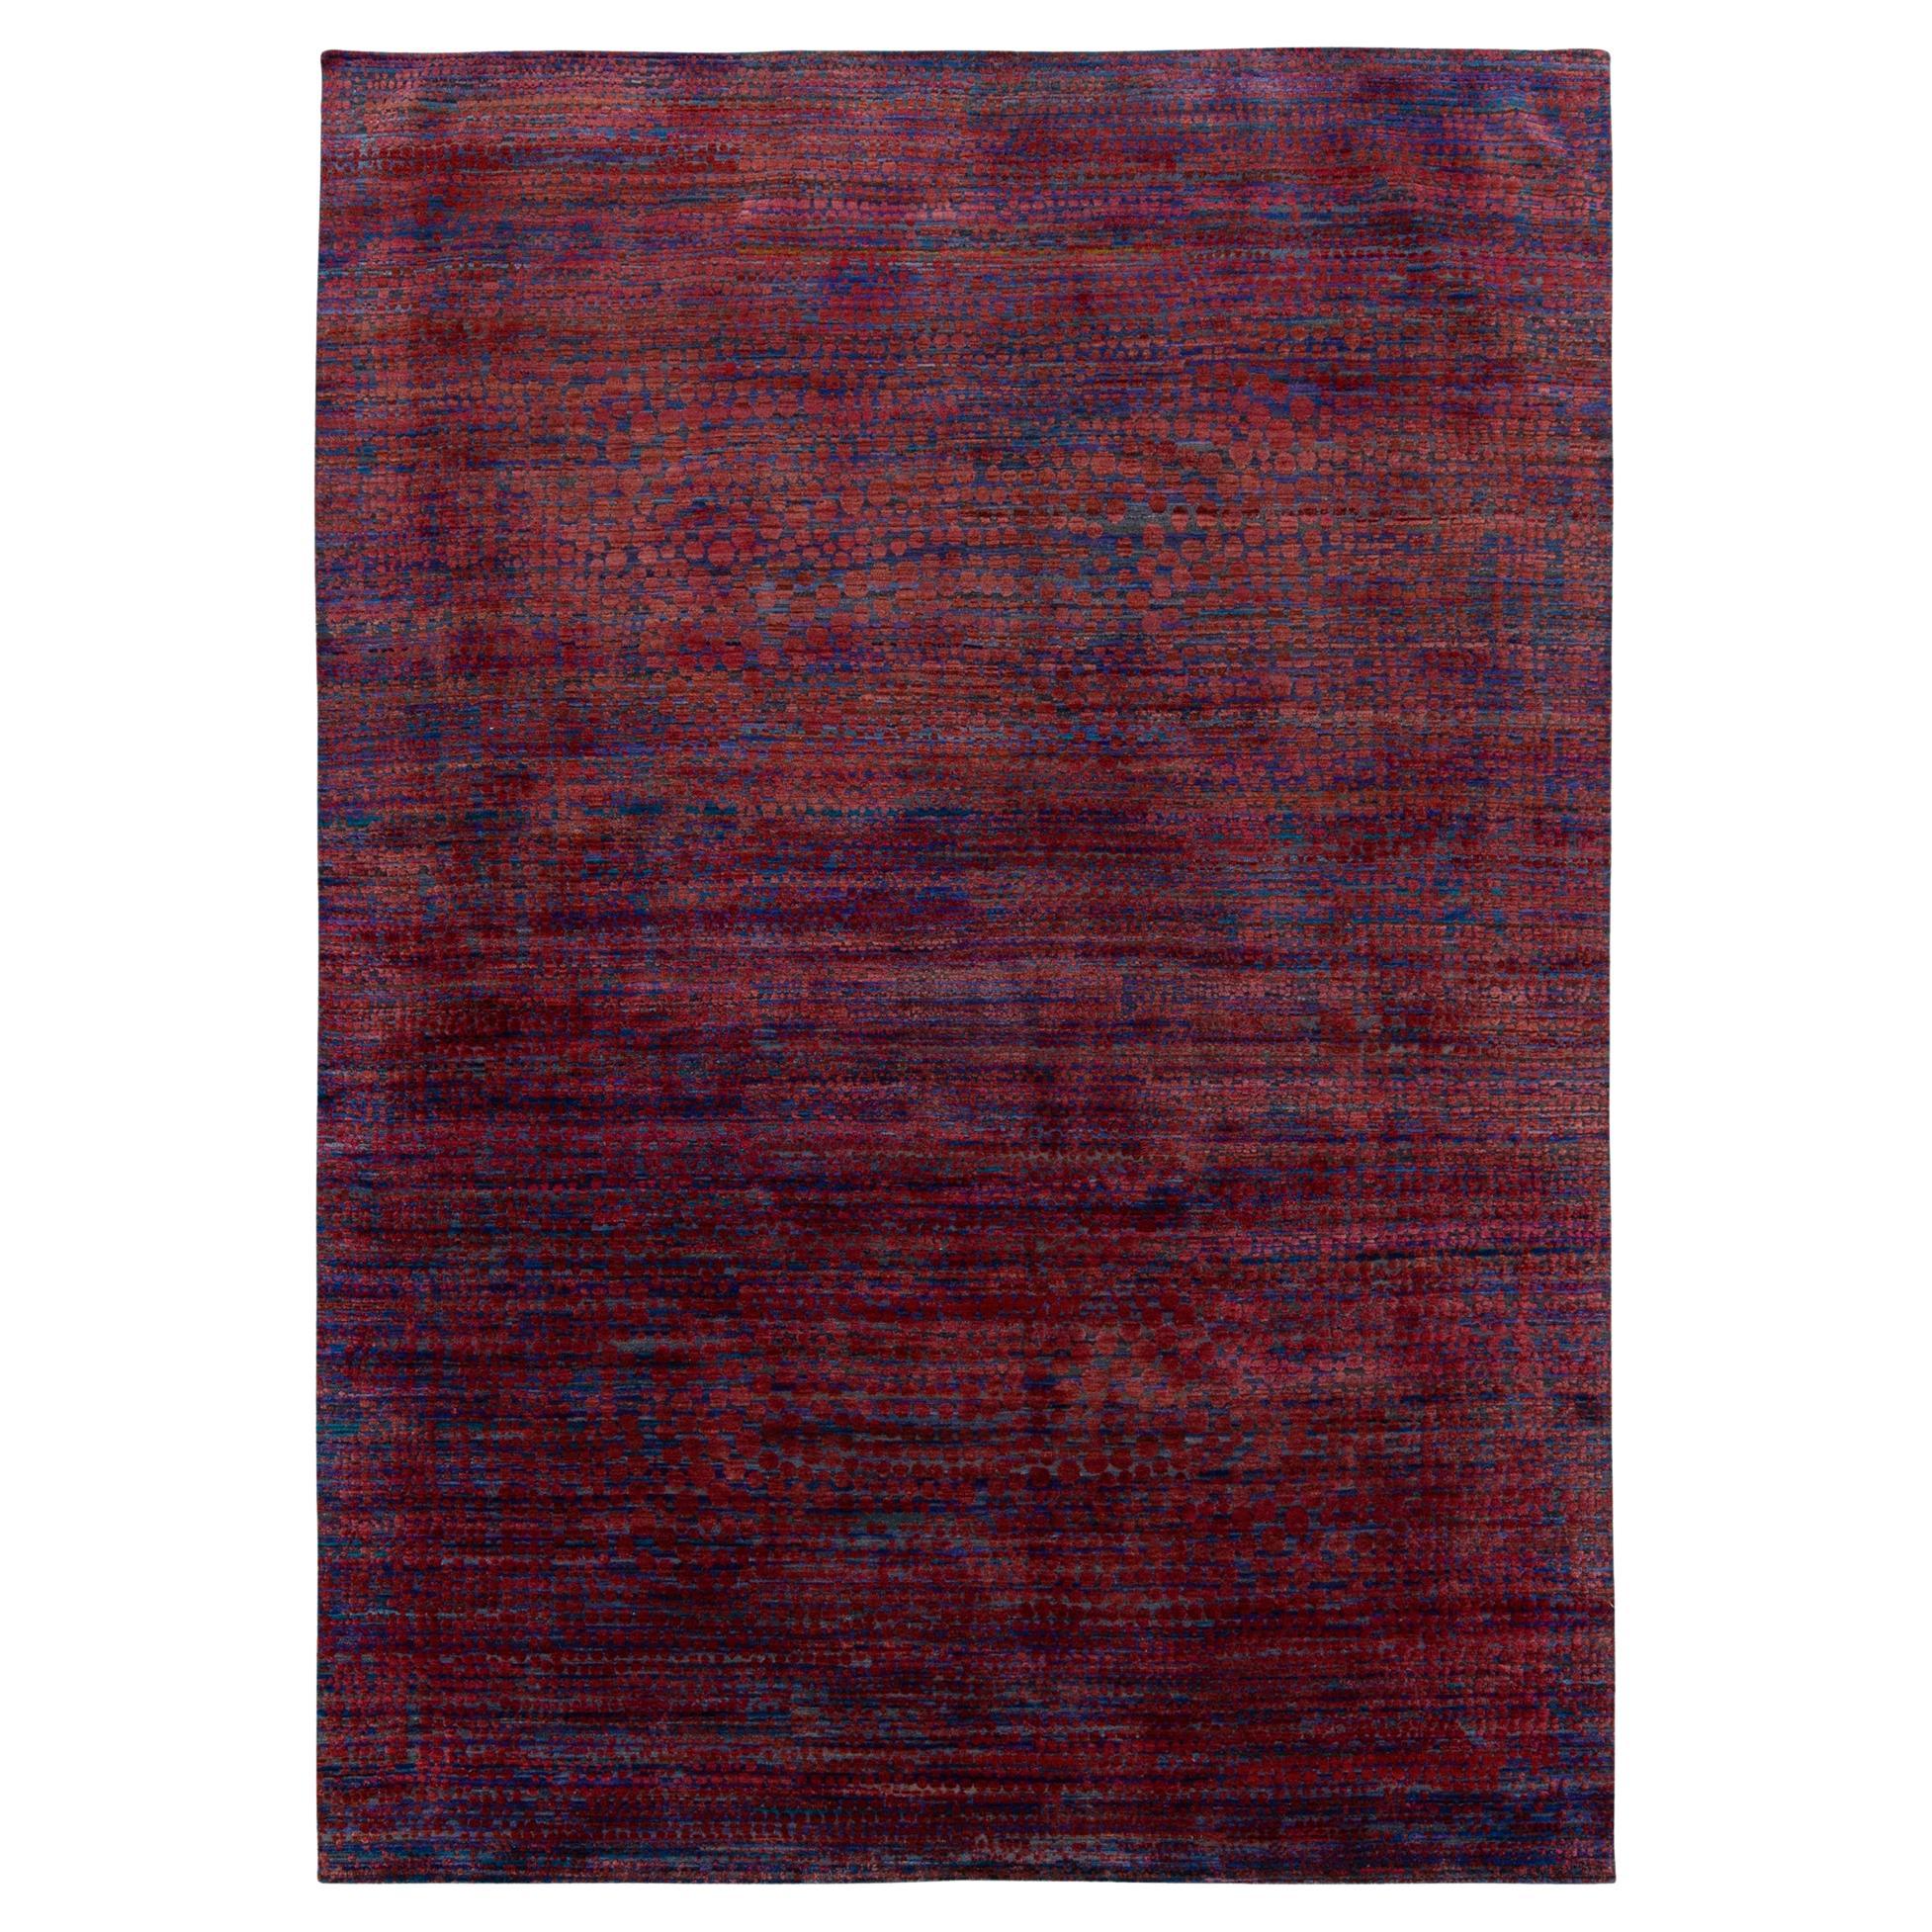 Rug & Kilim's Moderner abstrakter Teppich mit rotem und blauem Punktmuster